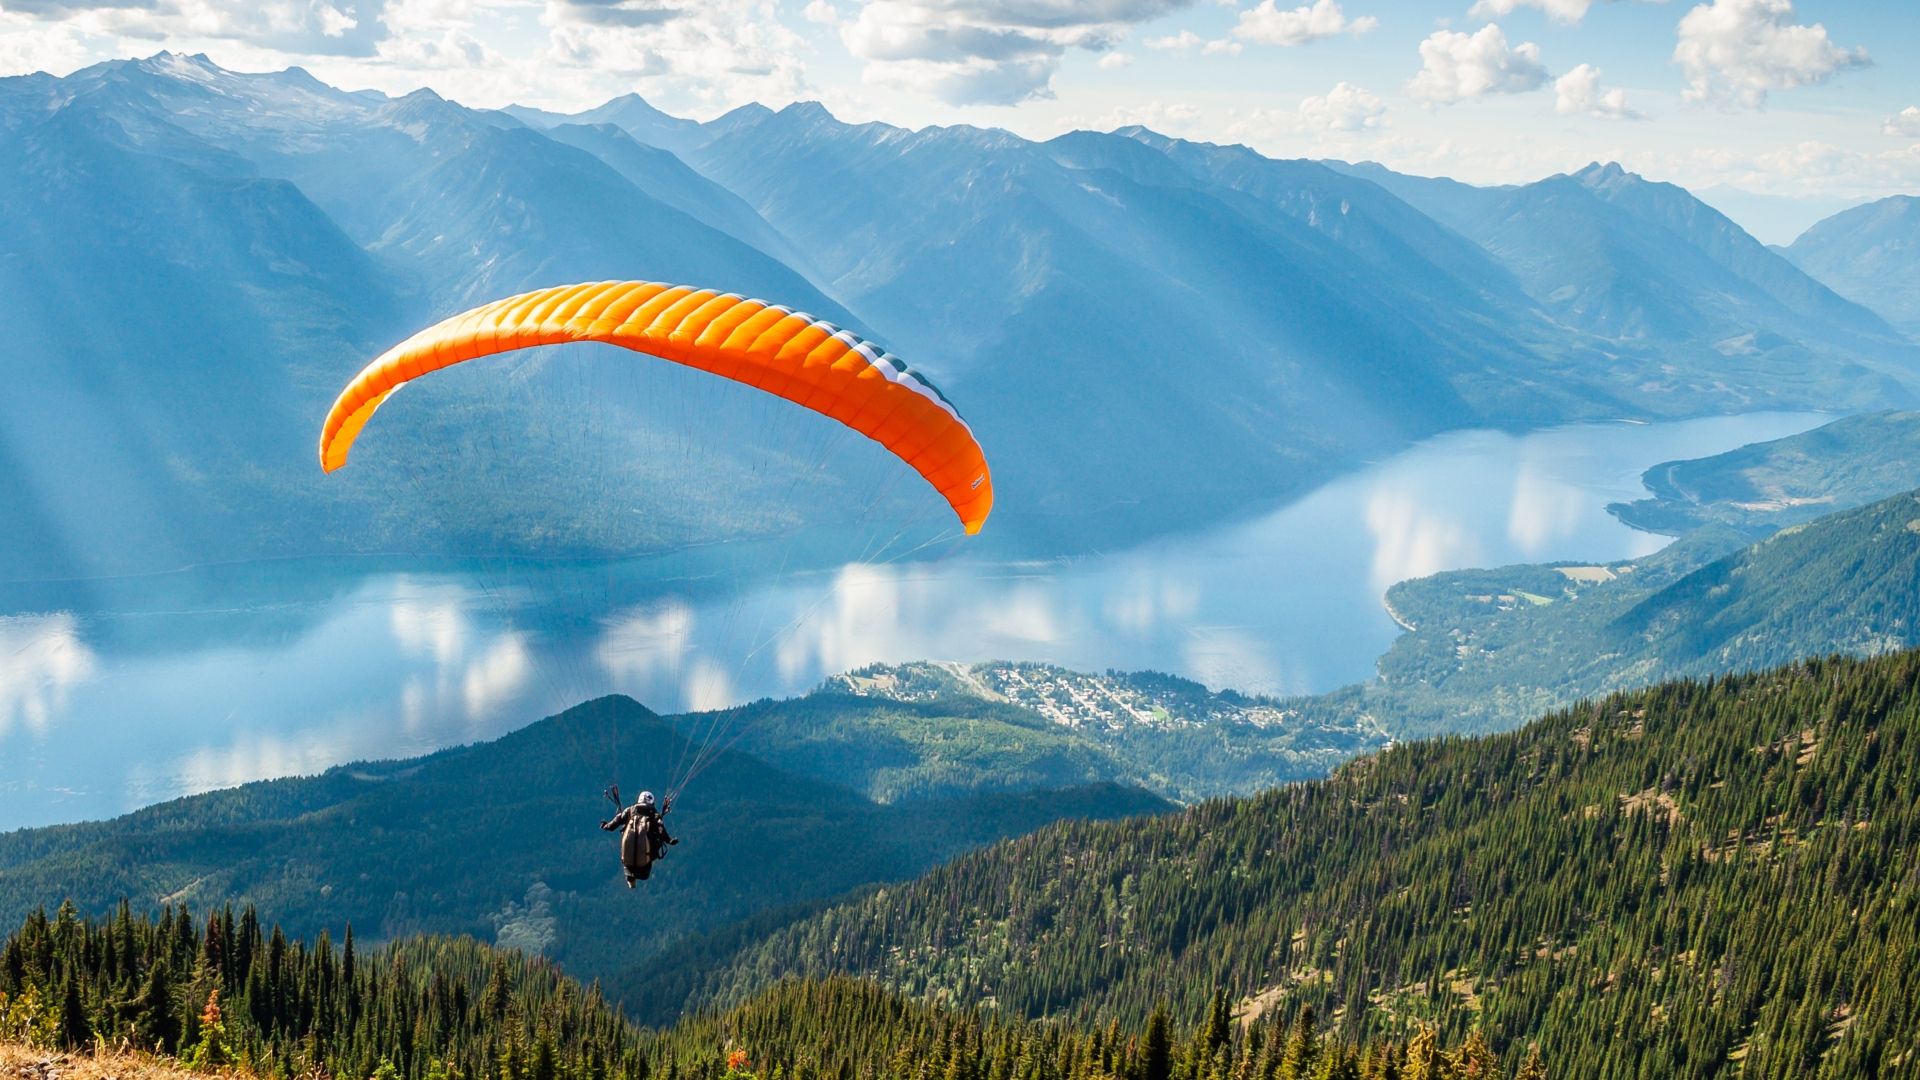 A paraglider against a mountain range